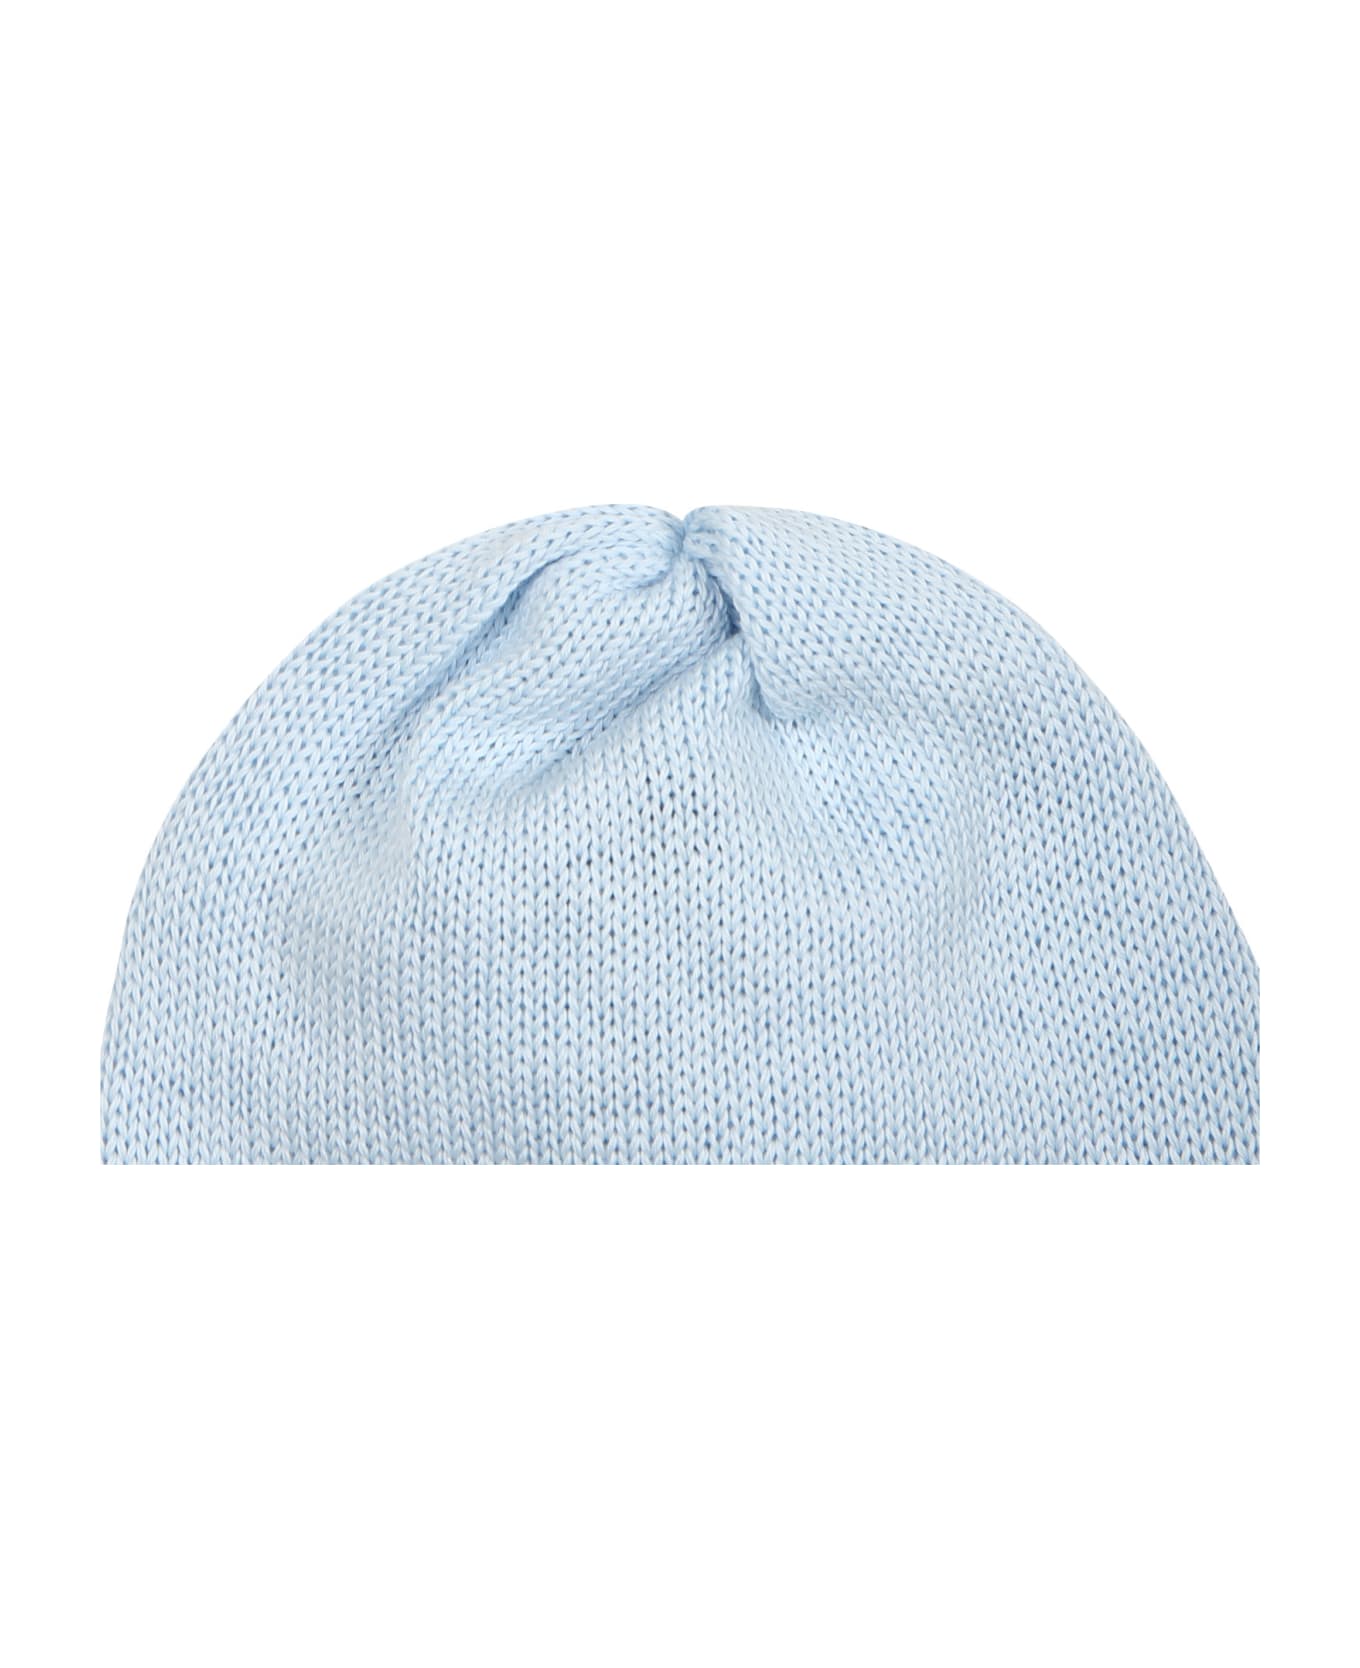 Little Bear Sky Blue Hat For Baby Boy - Light Blue